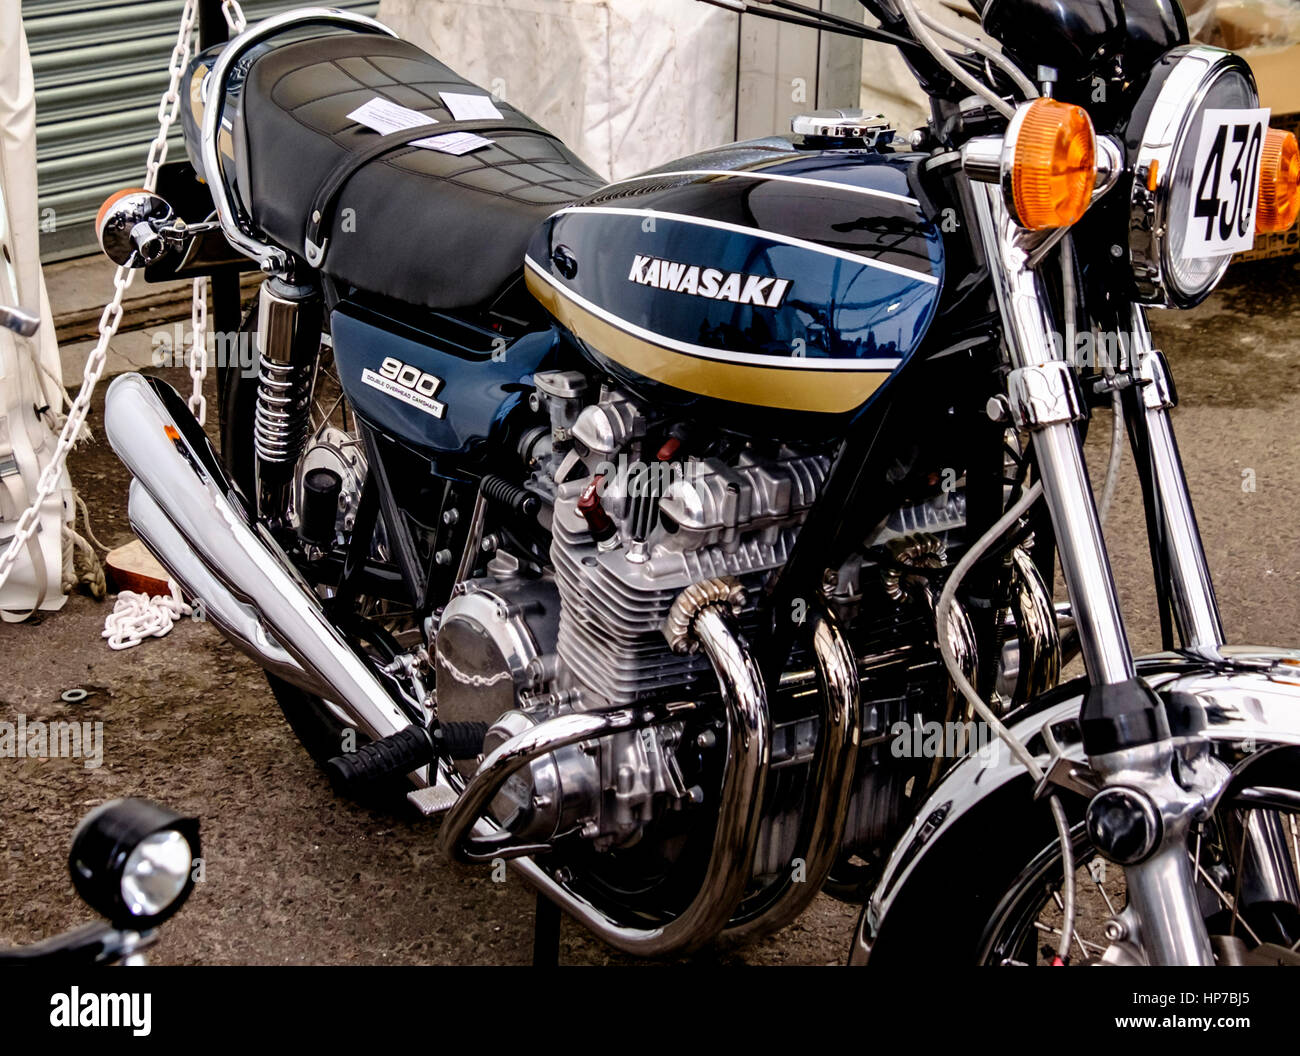 Kawasaki Z900 bikes for sale